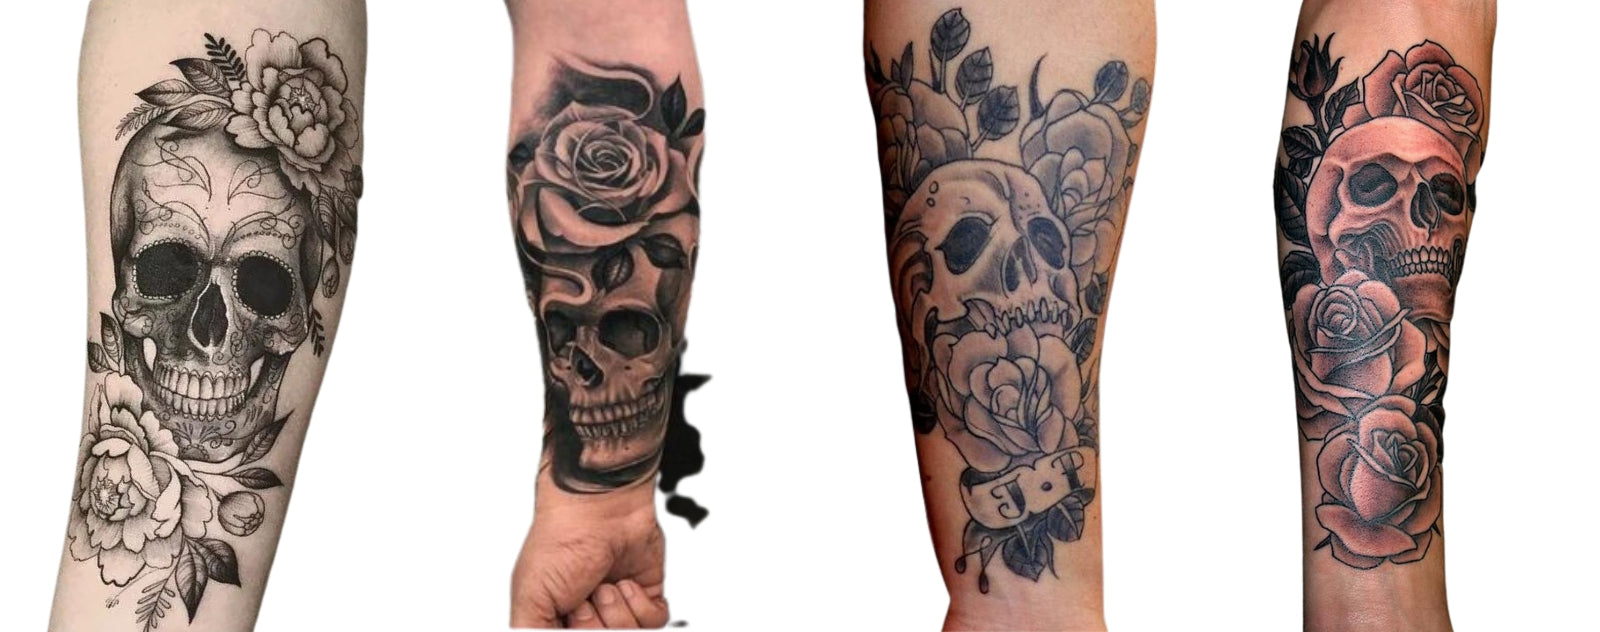 Tatuajes Calaveras con Rosas Antebrazo